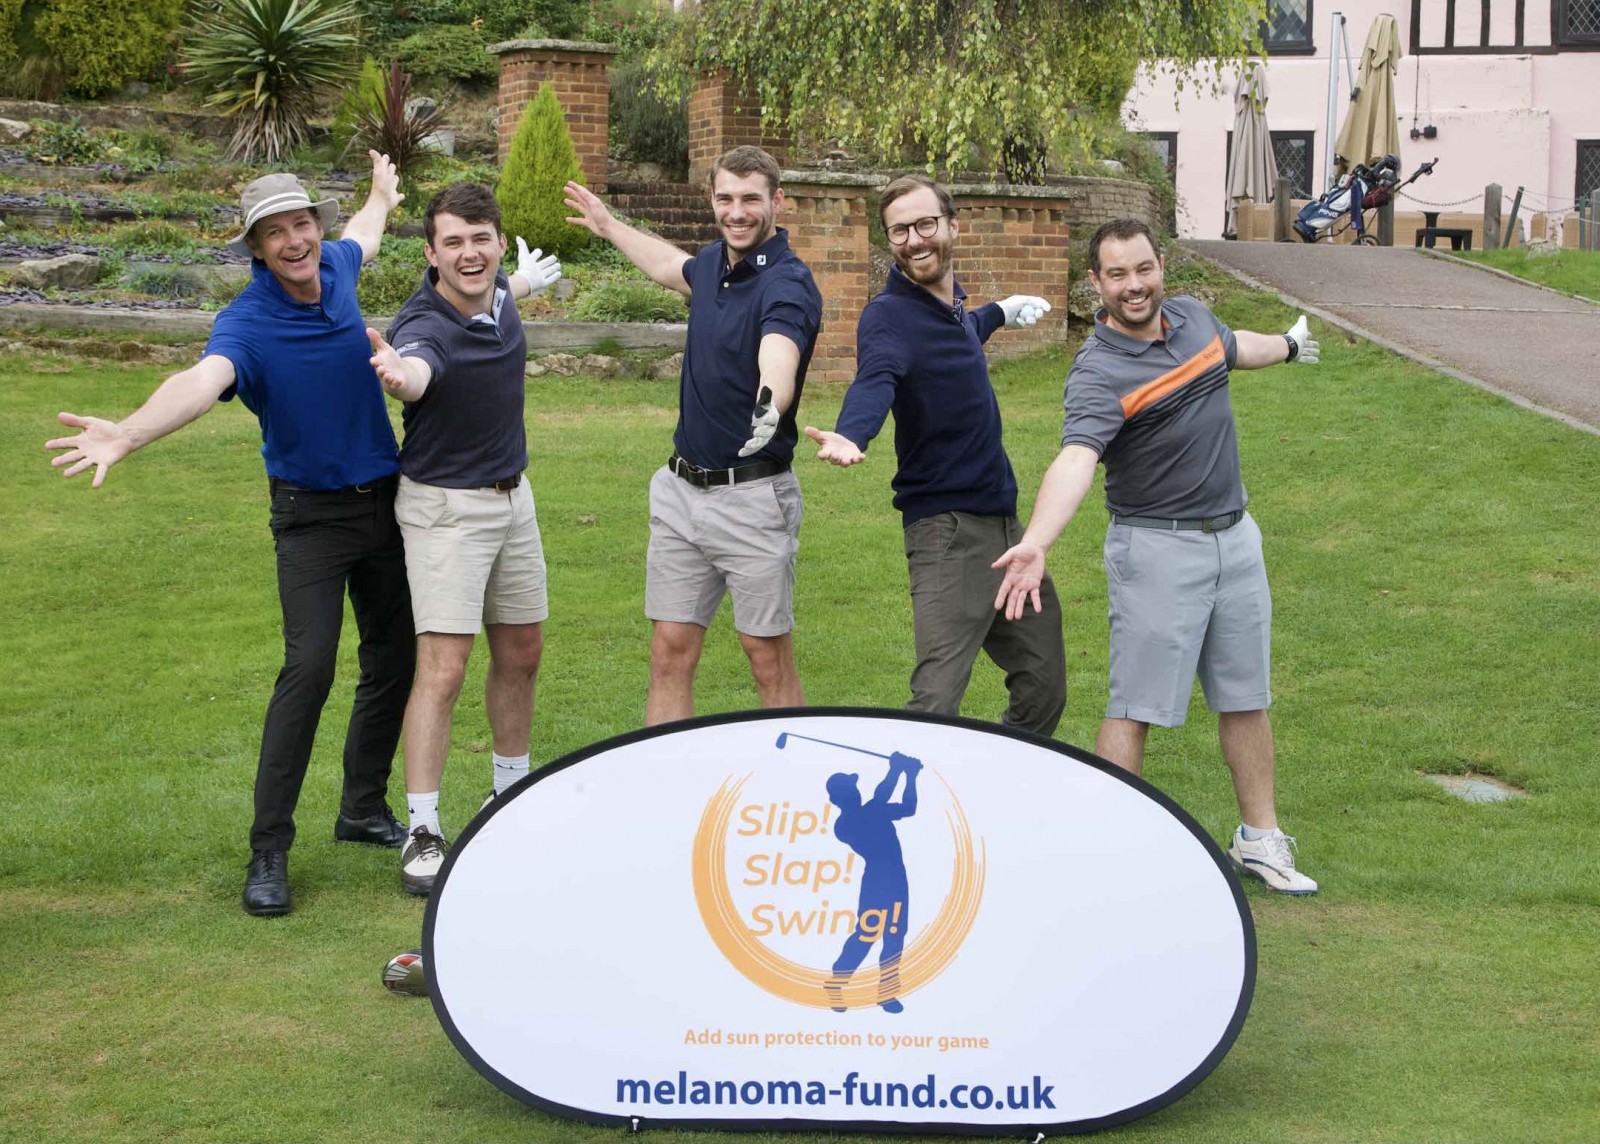 ¡Deslizar!  Slap Swing!  golf day recauda fondos vitales para la caridad del melanoma - Golf News |  Revista de golf